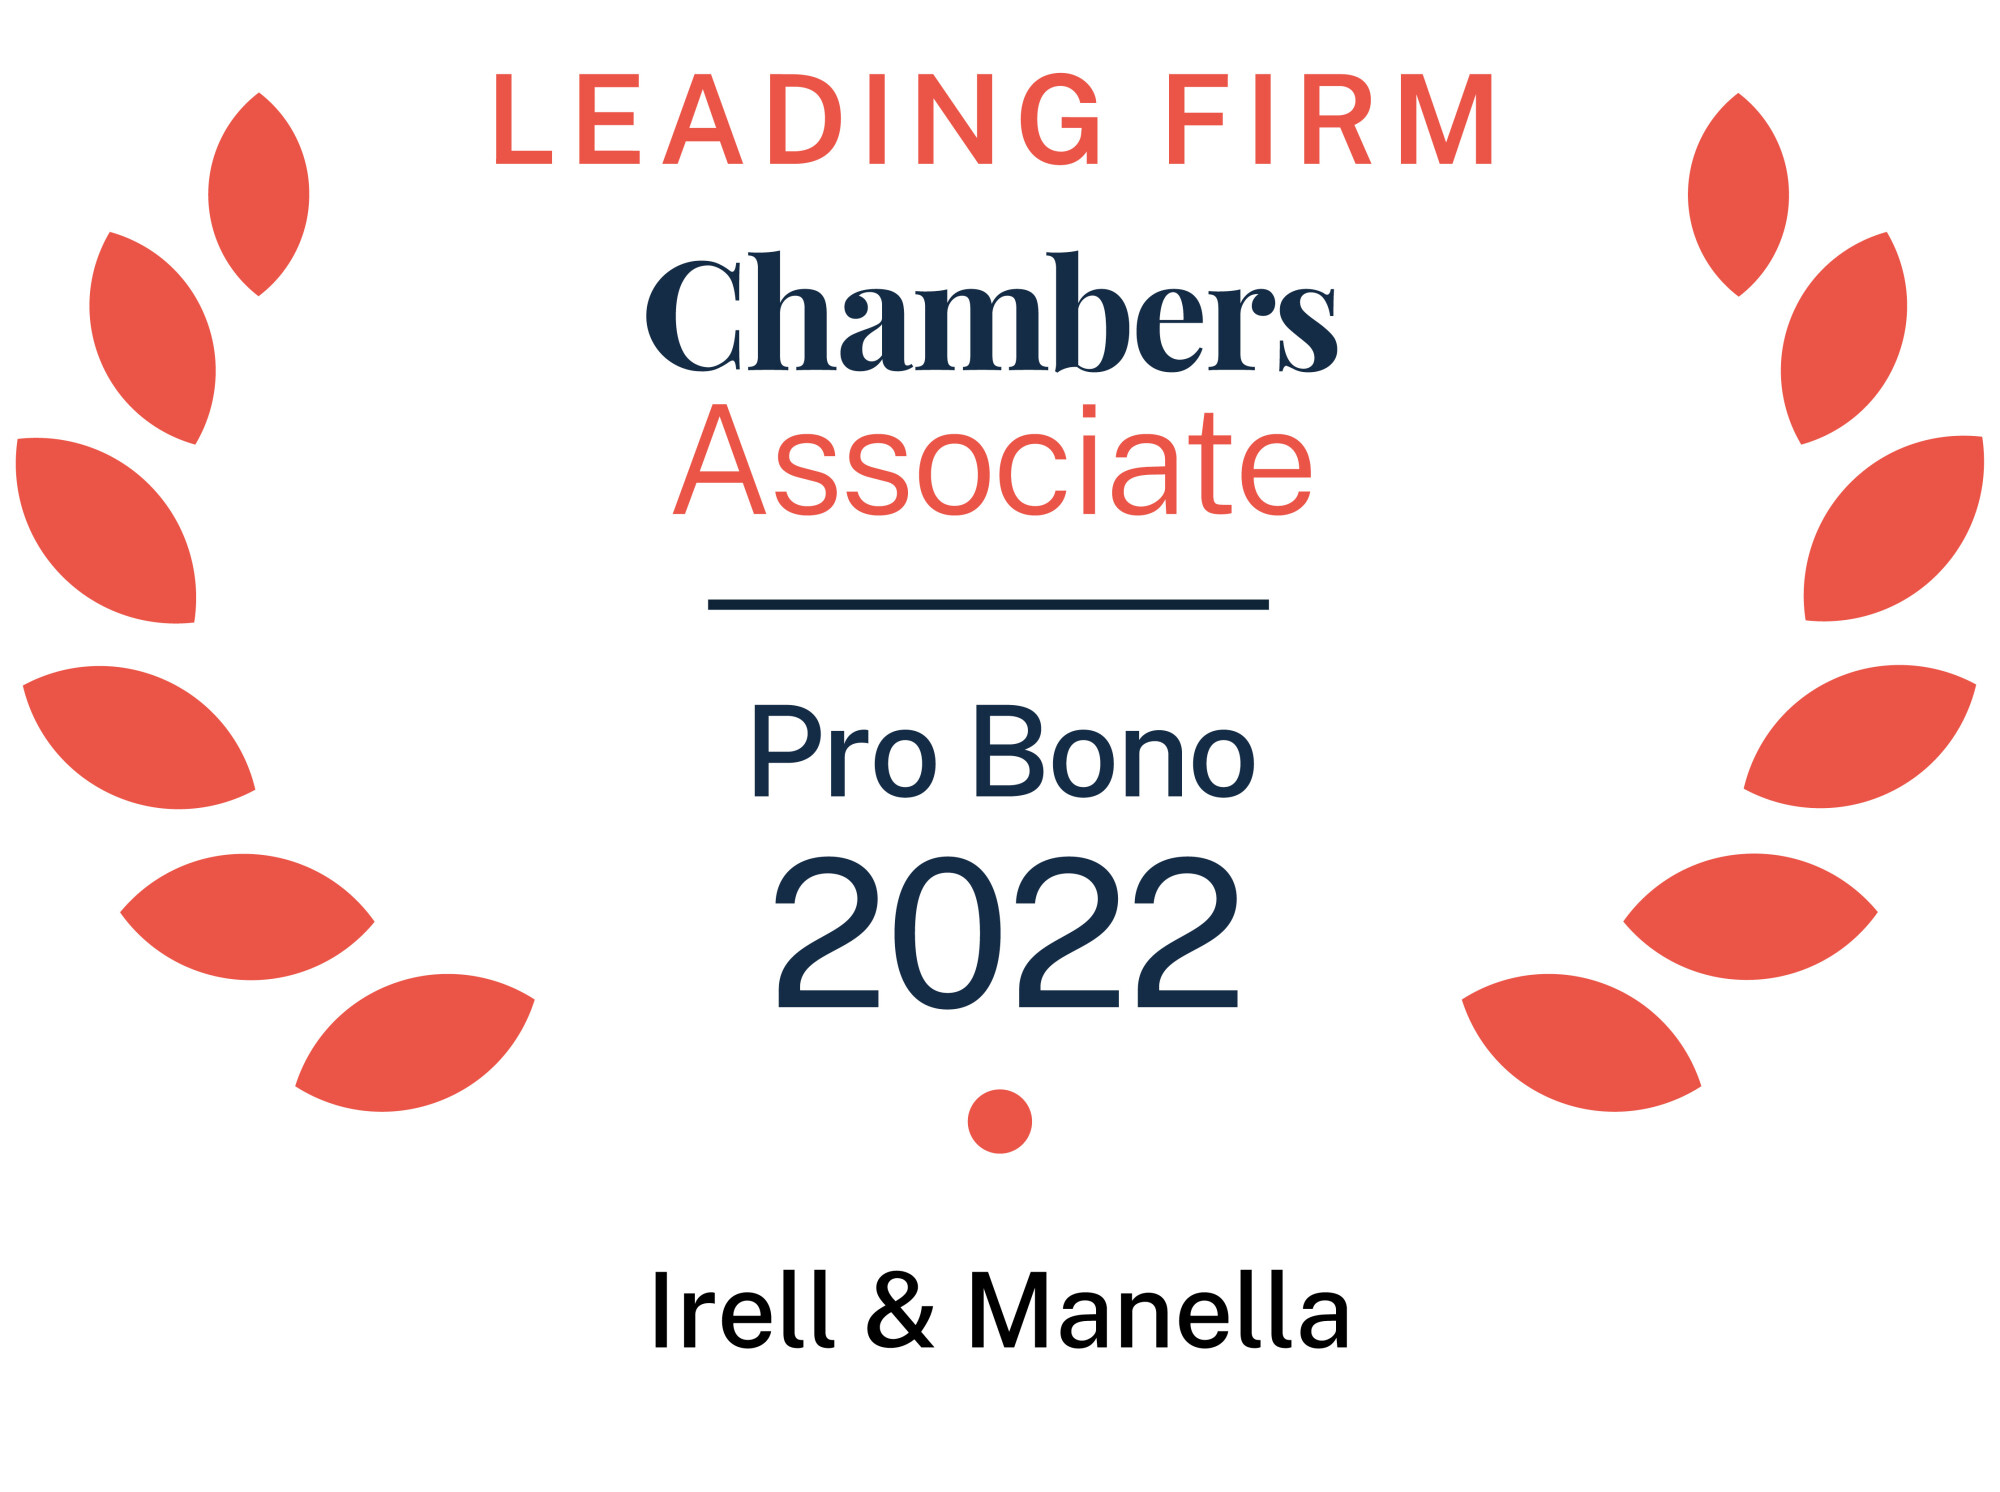 Chambers Associate Leading Firm in Pro Bono